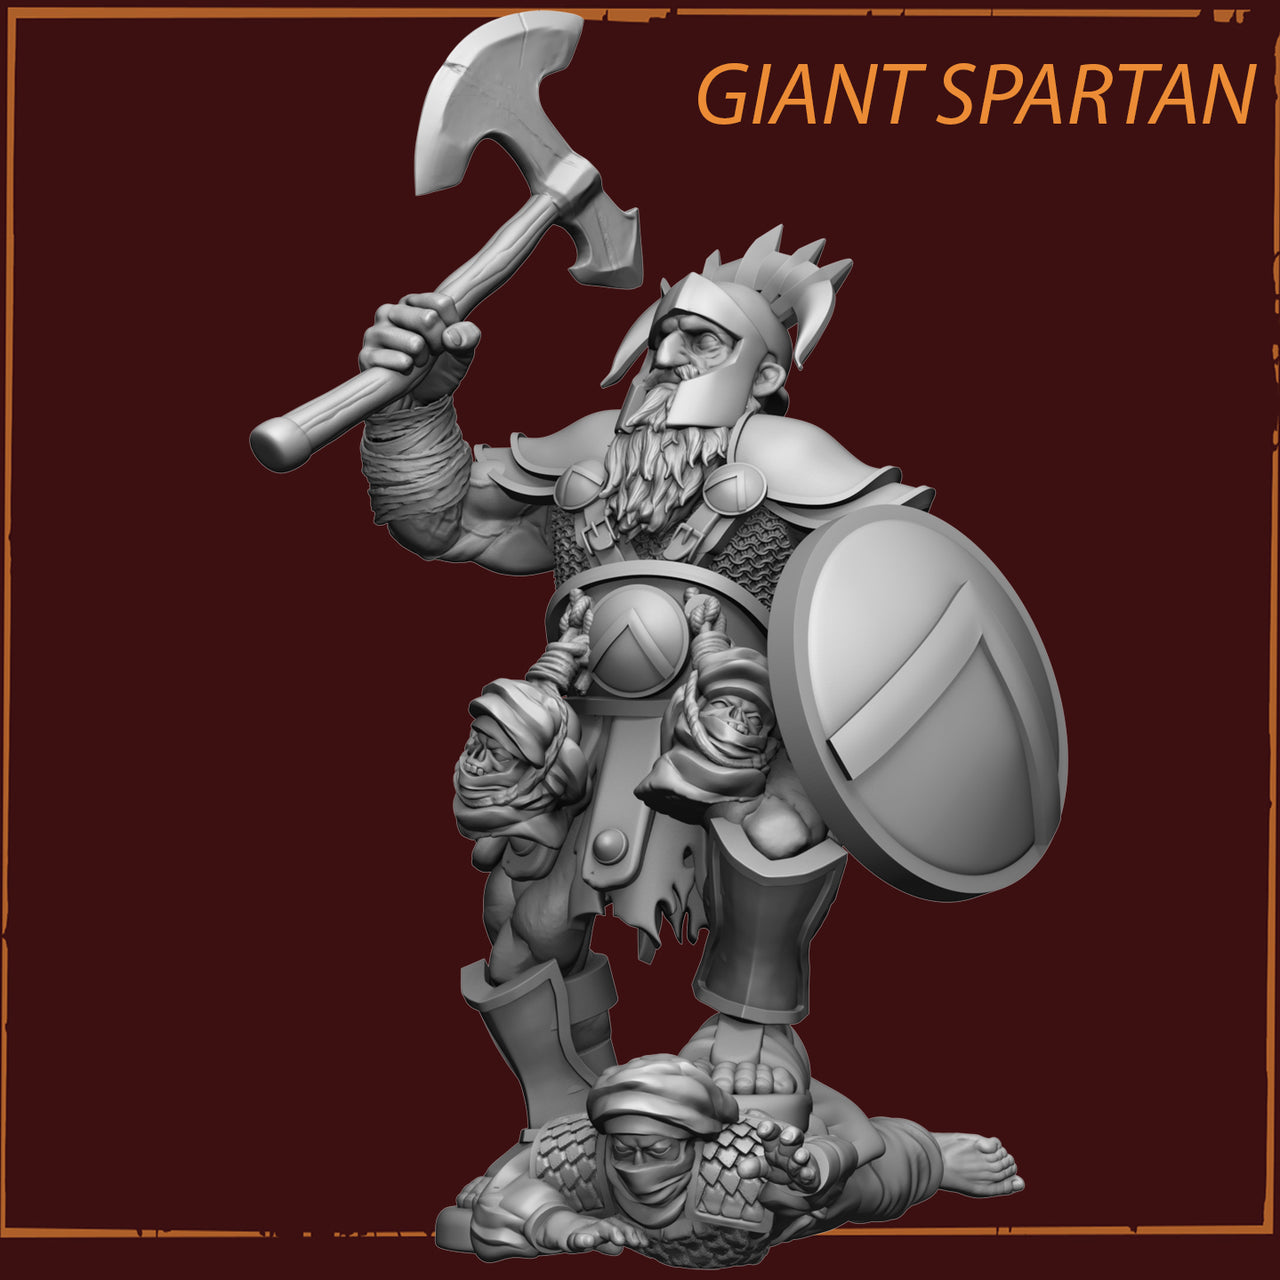 Giant Spartan